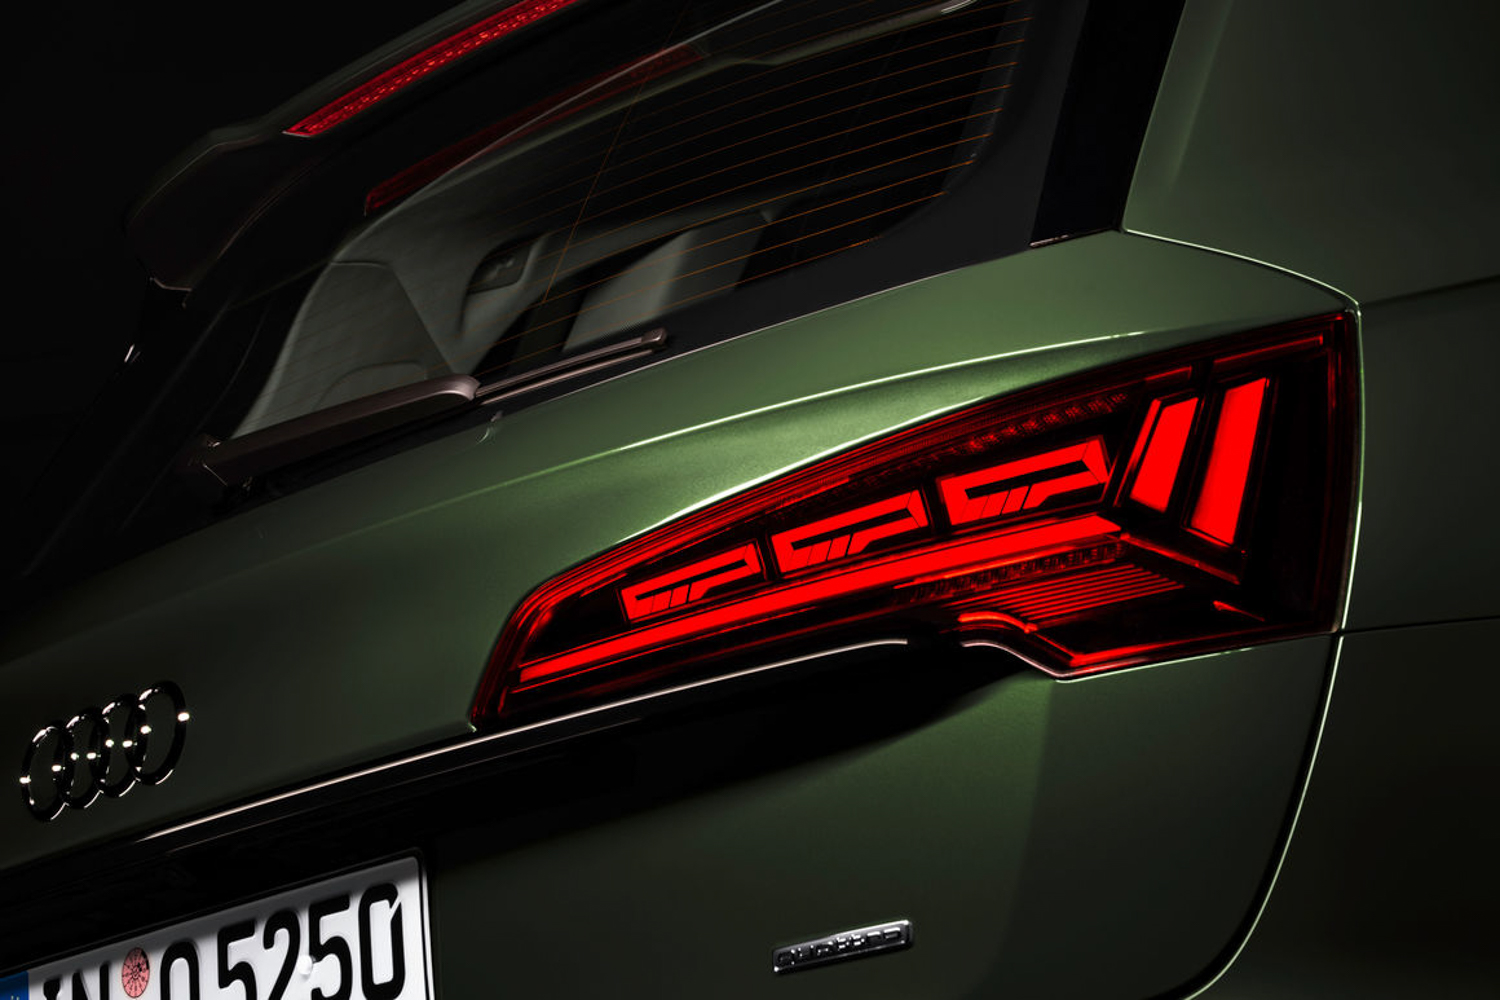 Audi Q5 to get OLED rear lights